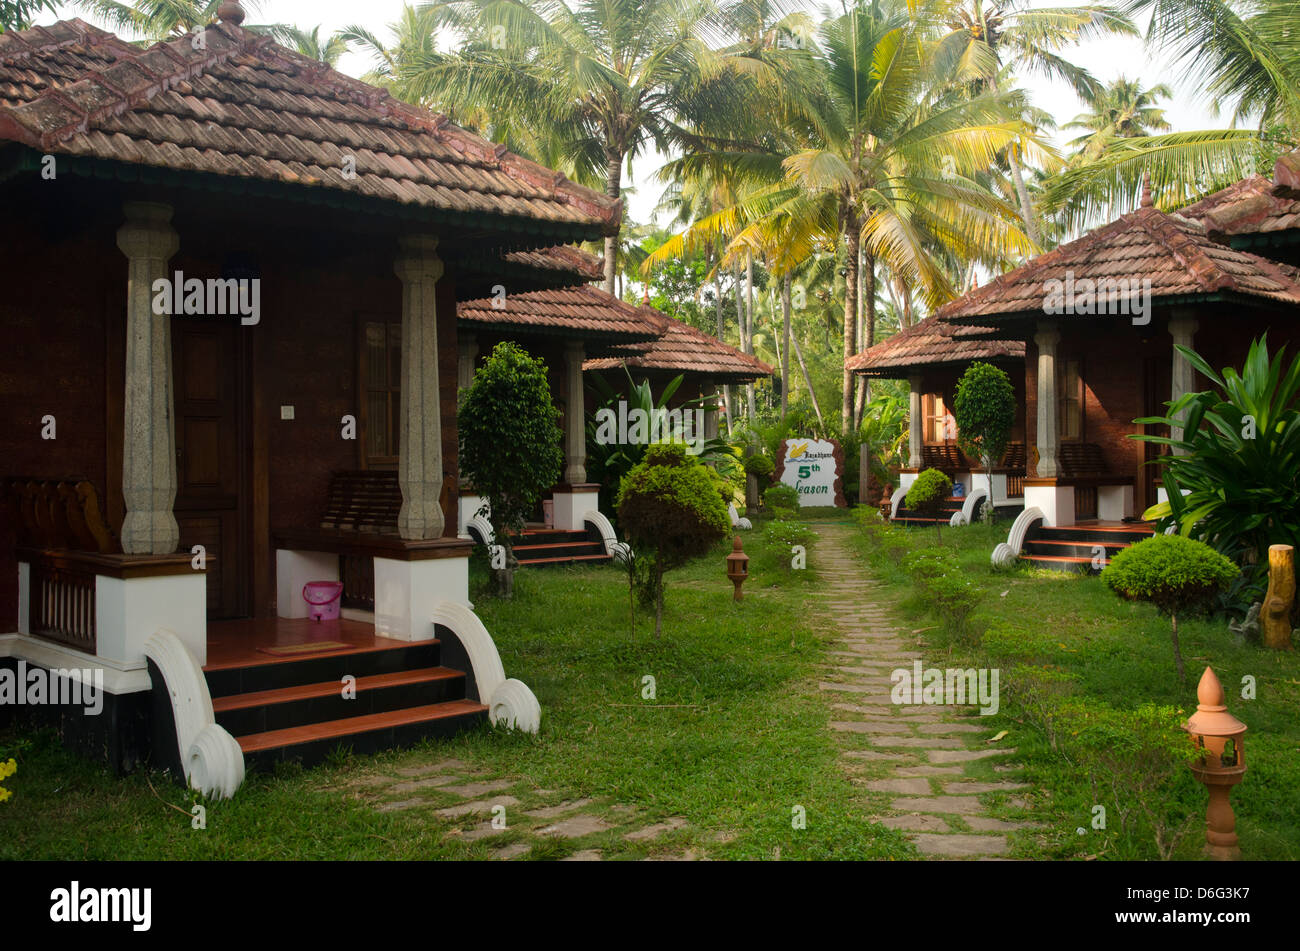 A tourist resort in Varkala, Kerala, India Stock Photo